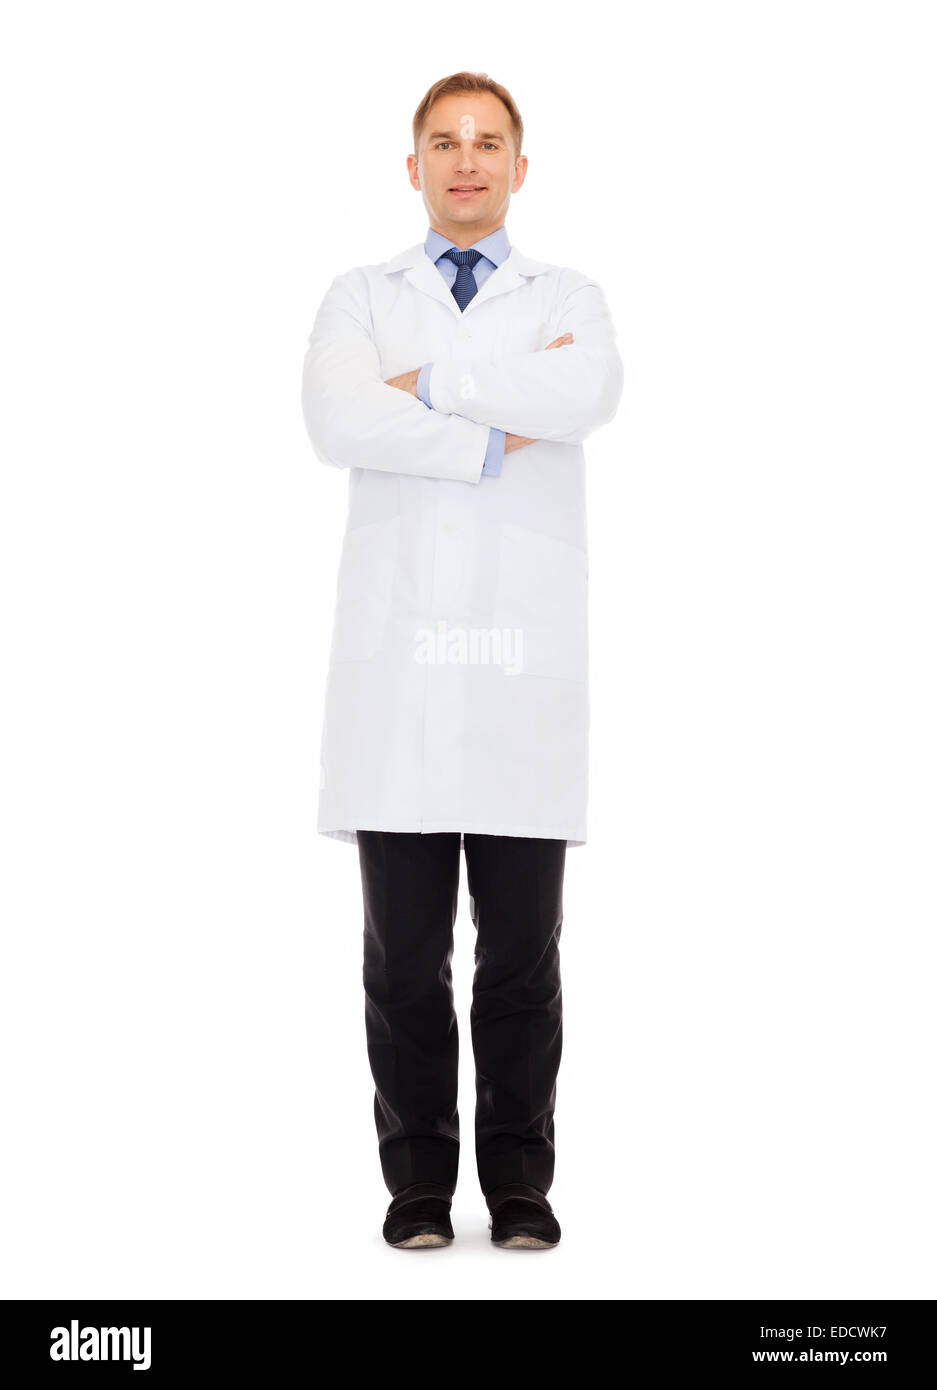 smiling male doctor in white coat Stock Photo